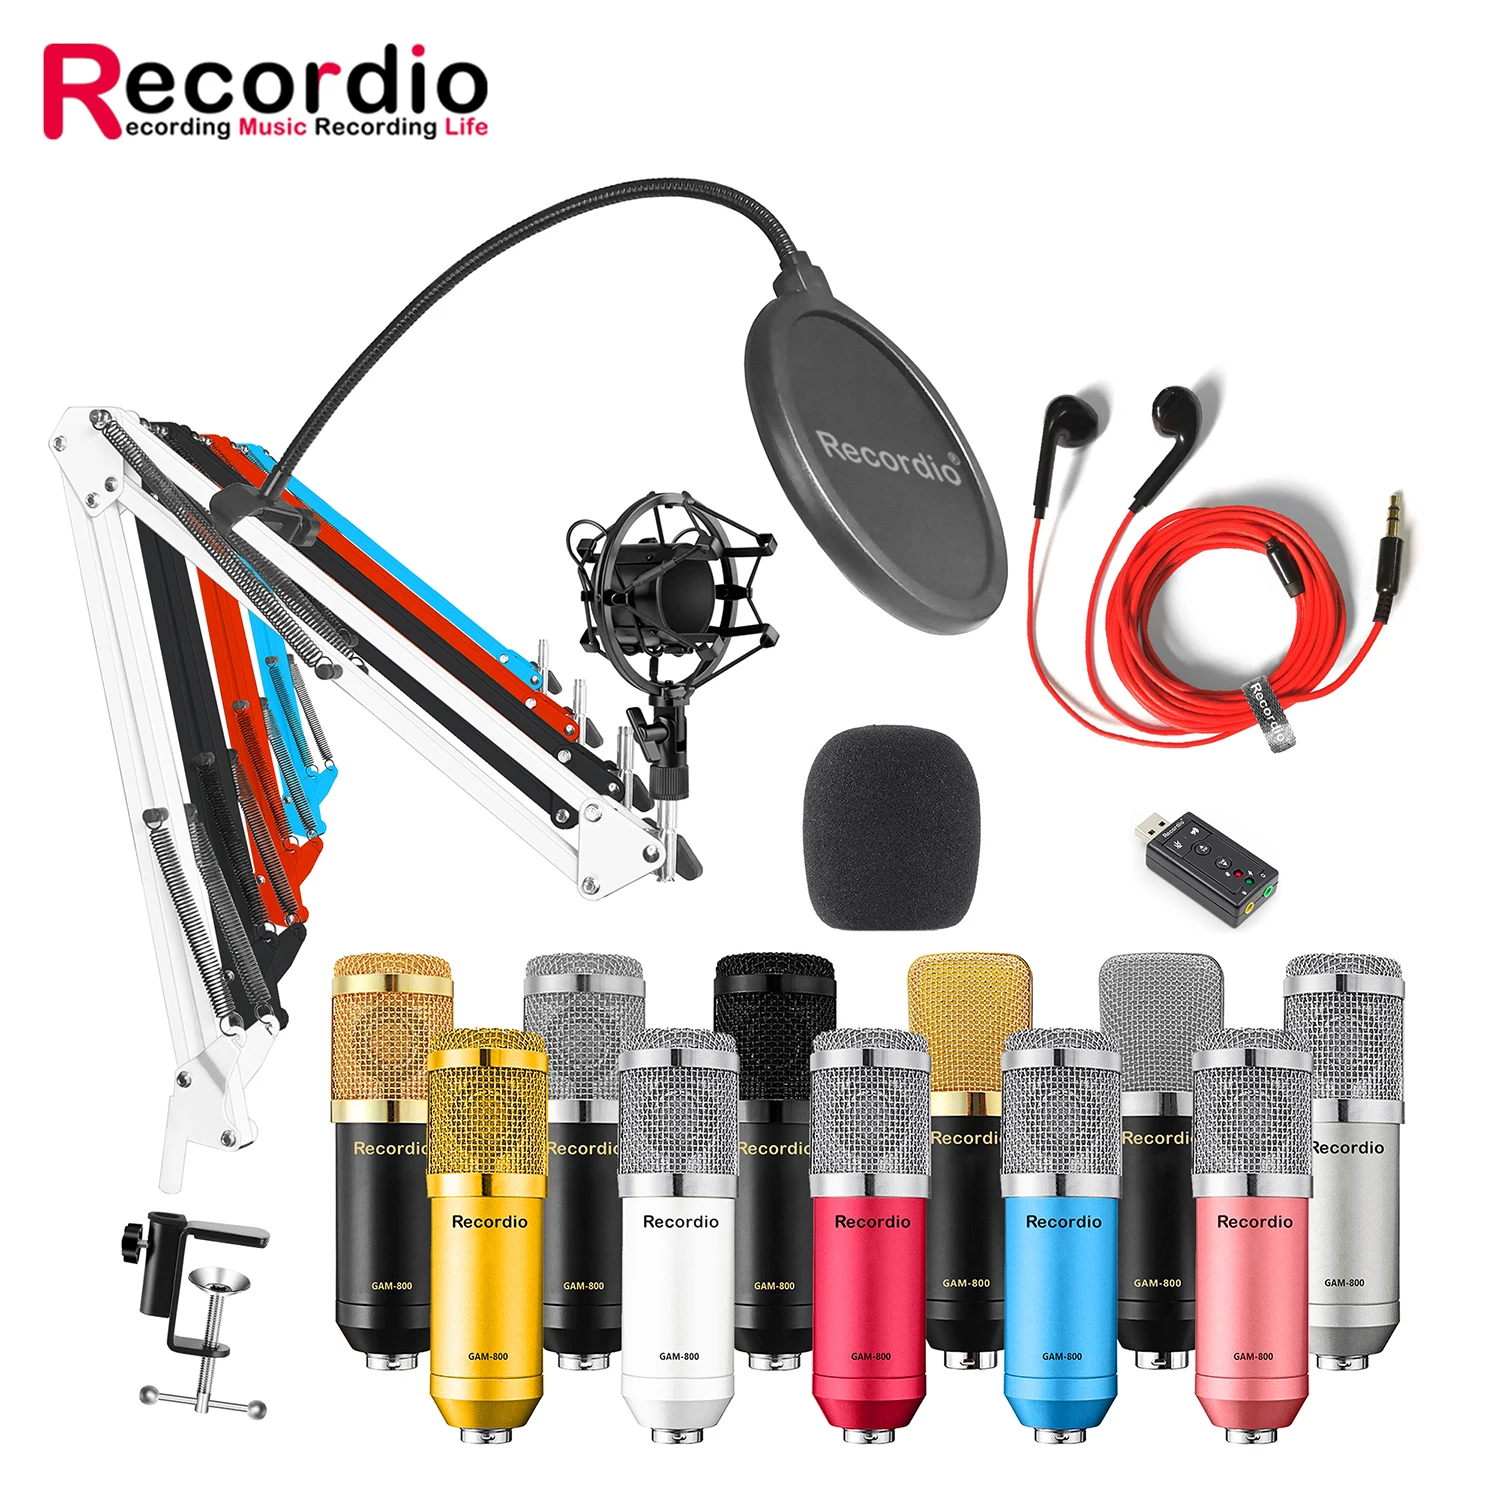 BM-800 Green Audio Microphone Professional Studio Condenser Sound Recording Microphone, Black color